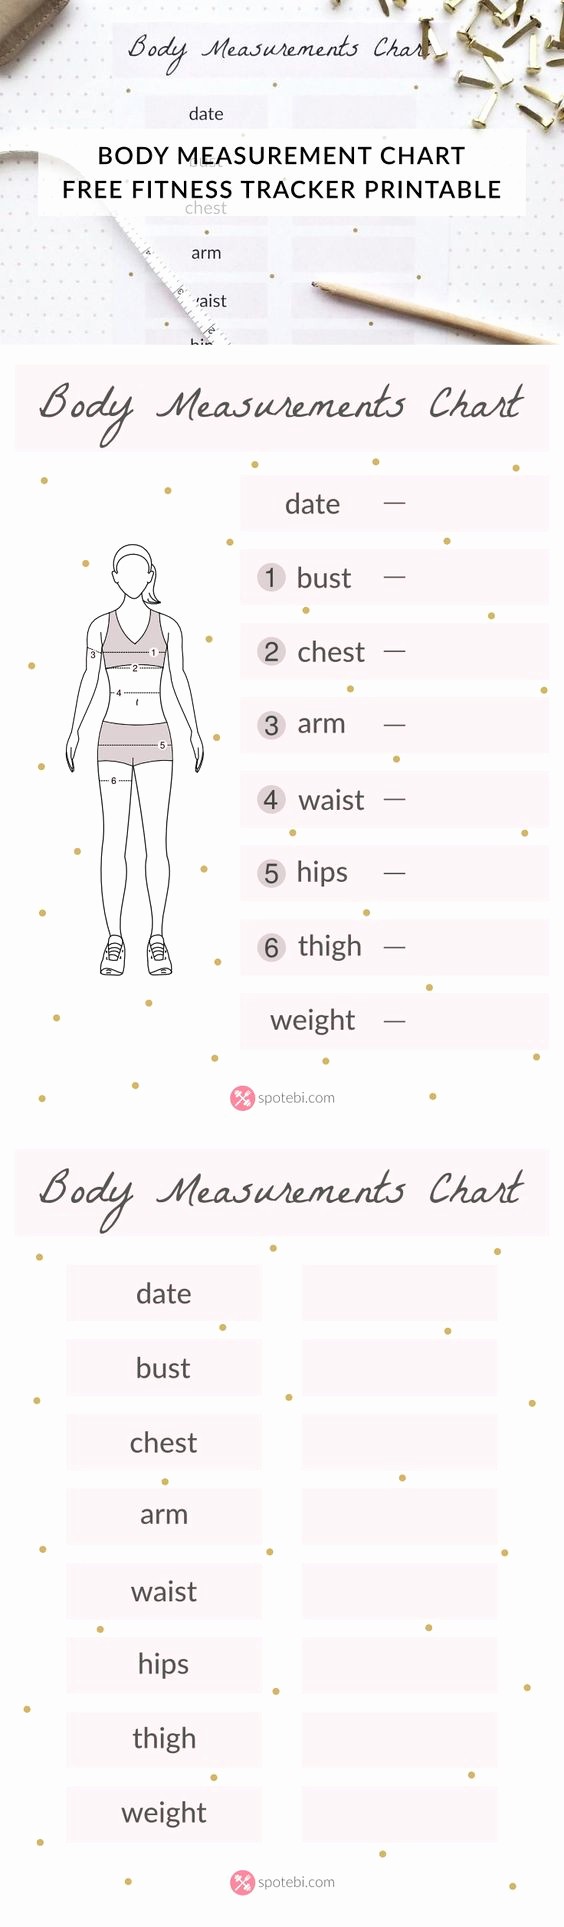 Printable Weight Loss Measurement Chart Best Of Body Measurement Chart Pinterest